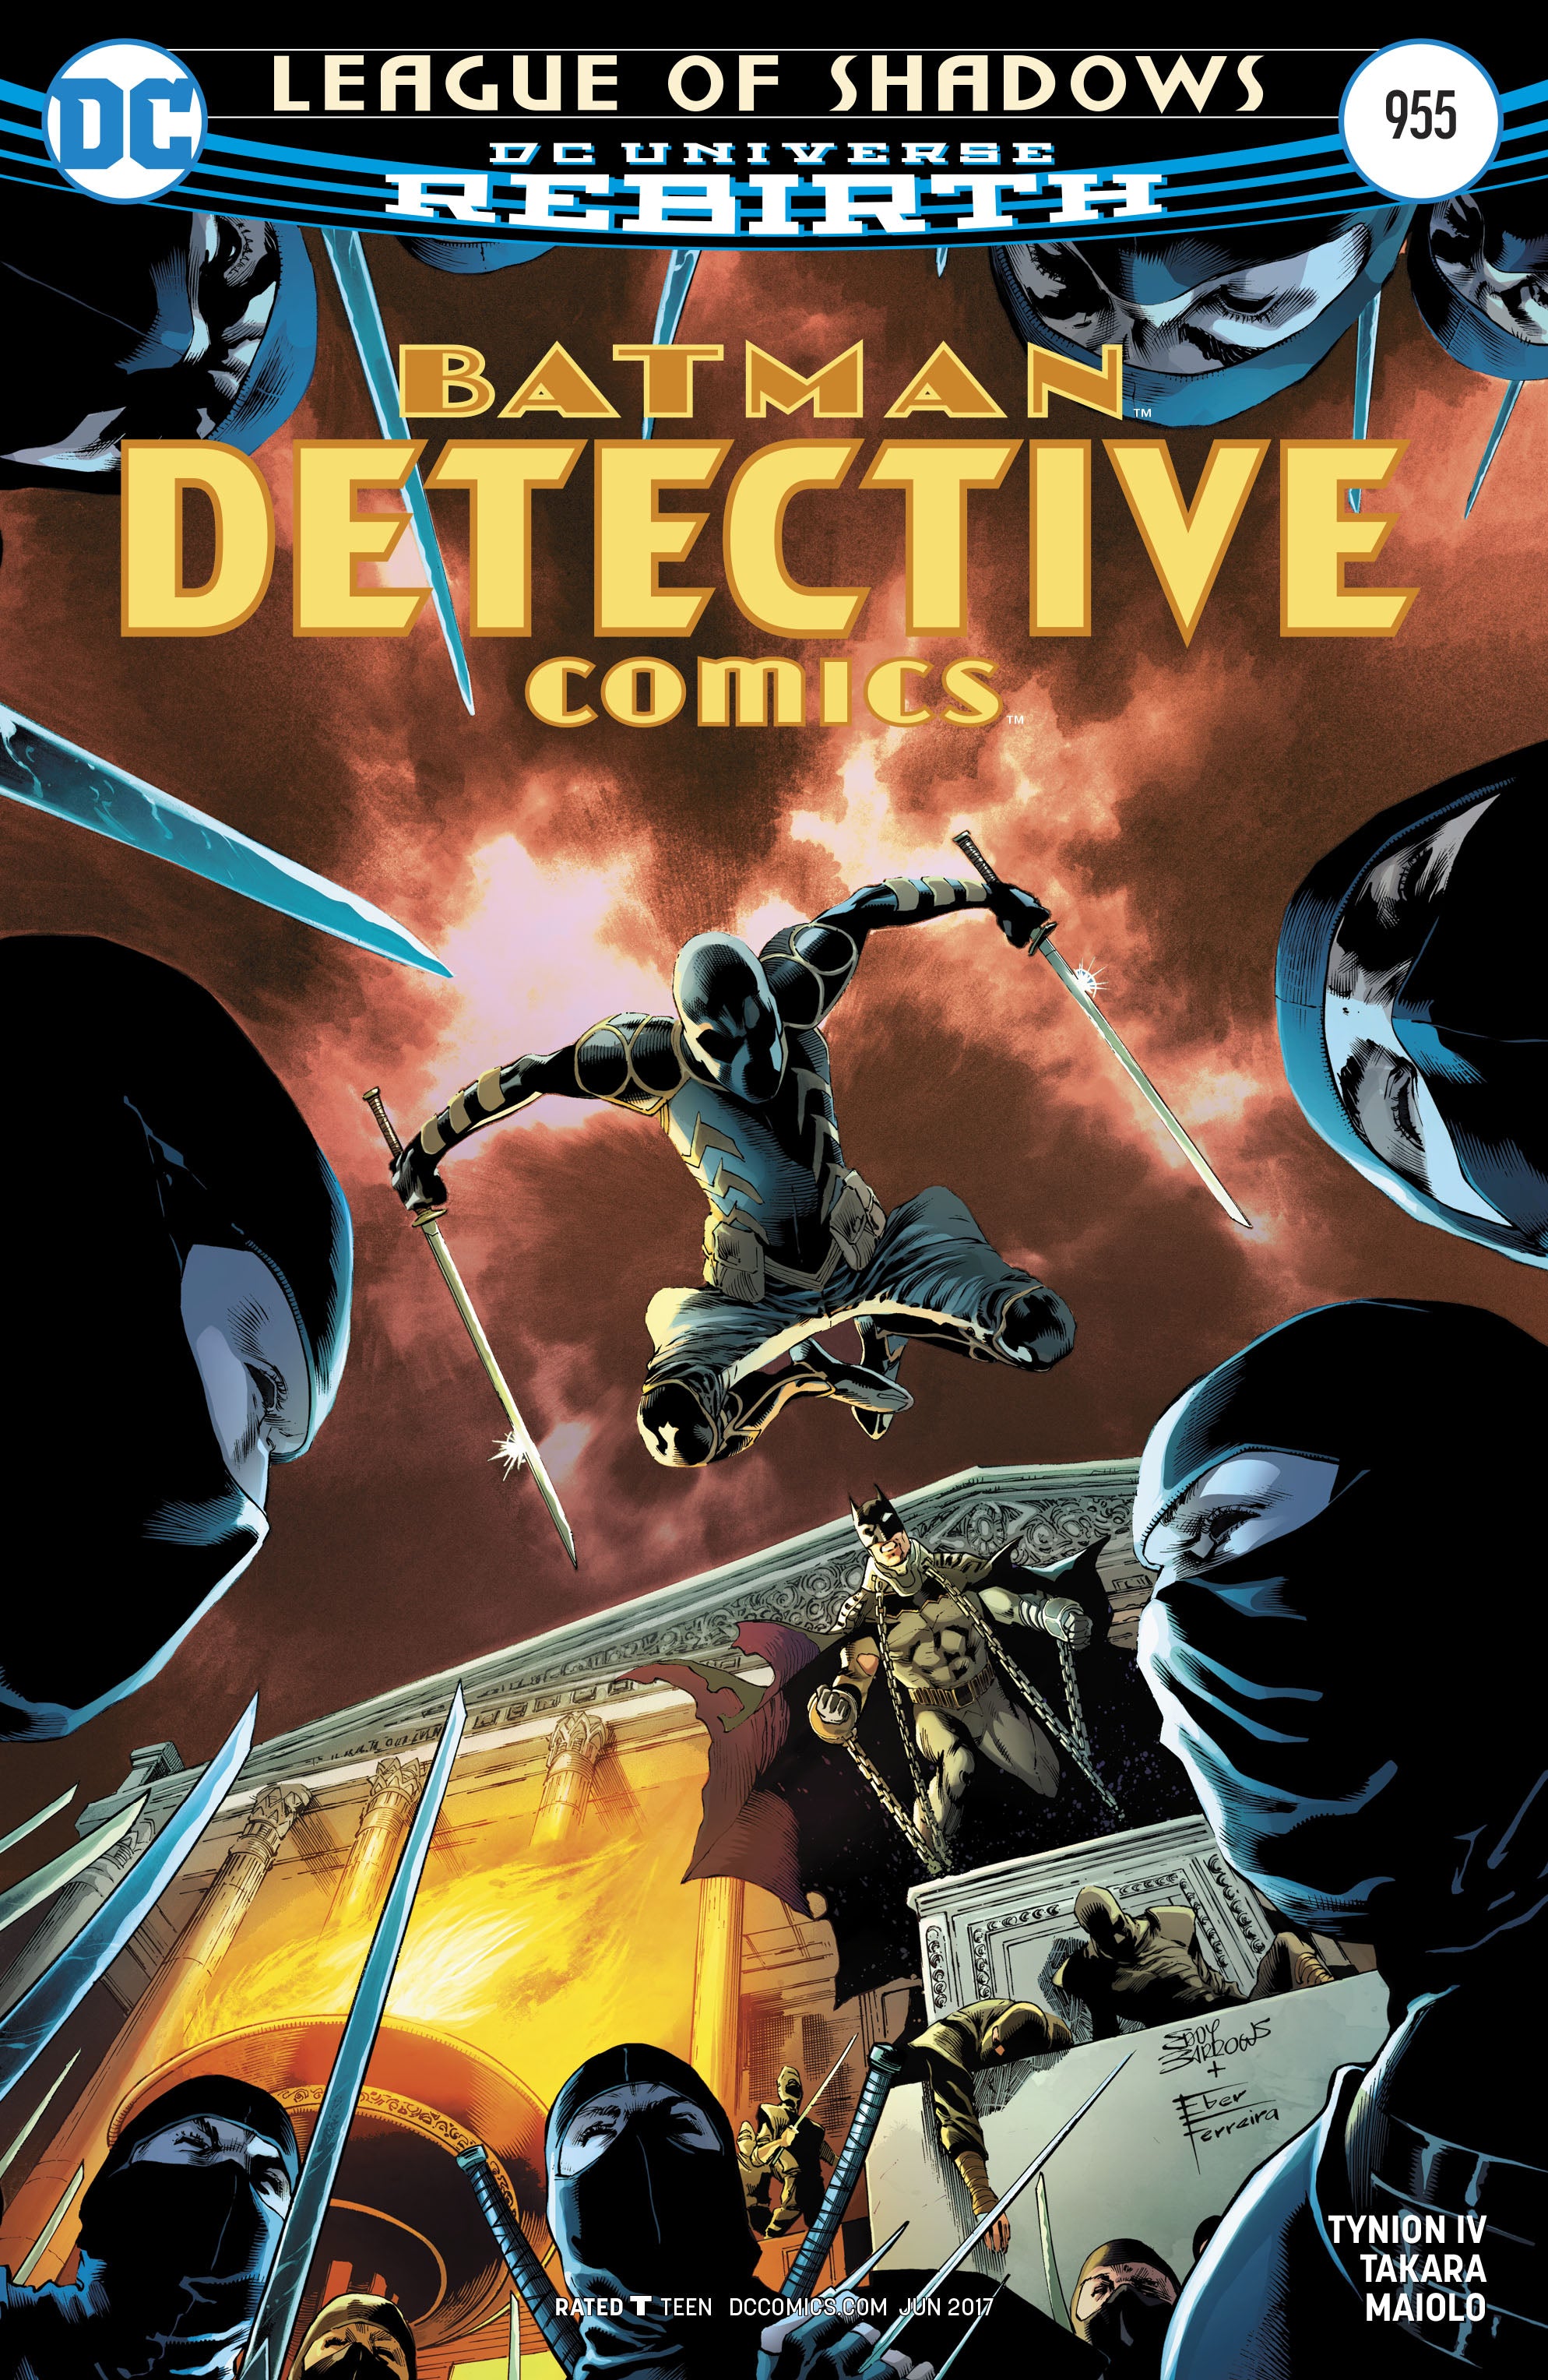 DETECTIVE COMICS #955 | Game Master's Emporium (The New GME)